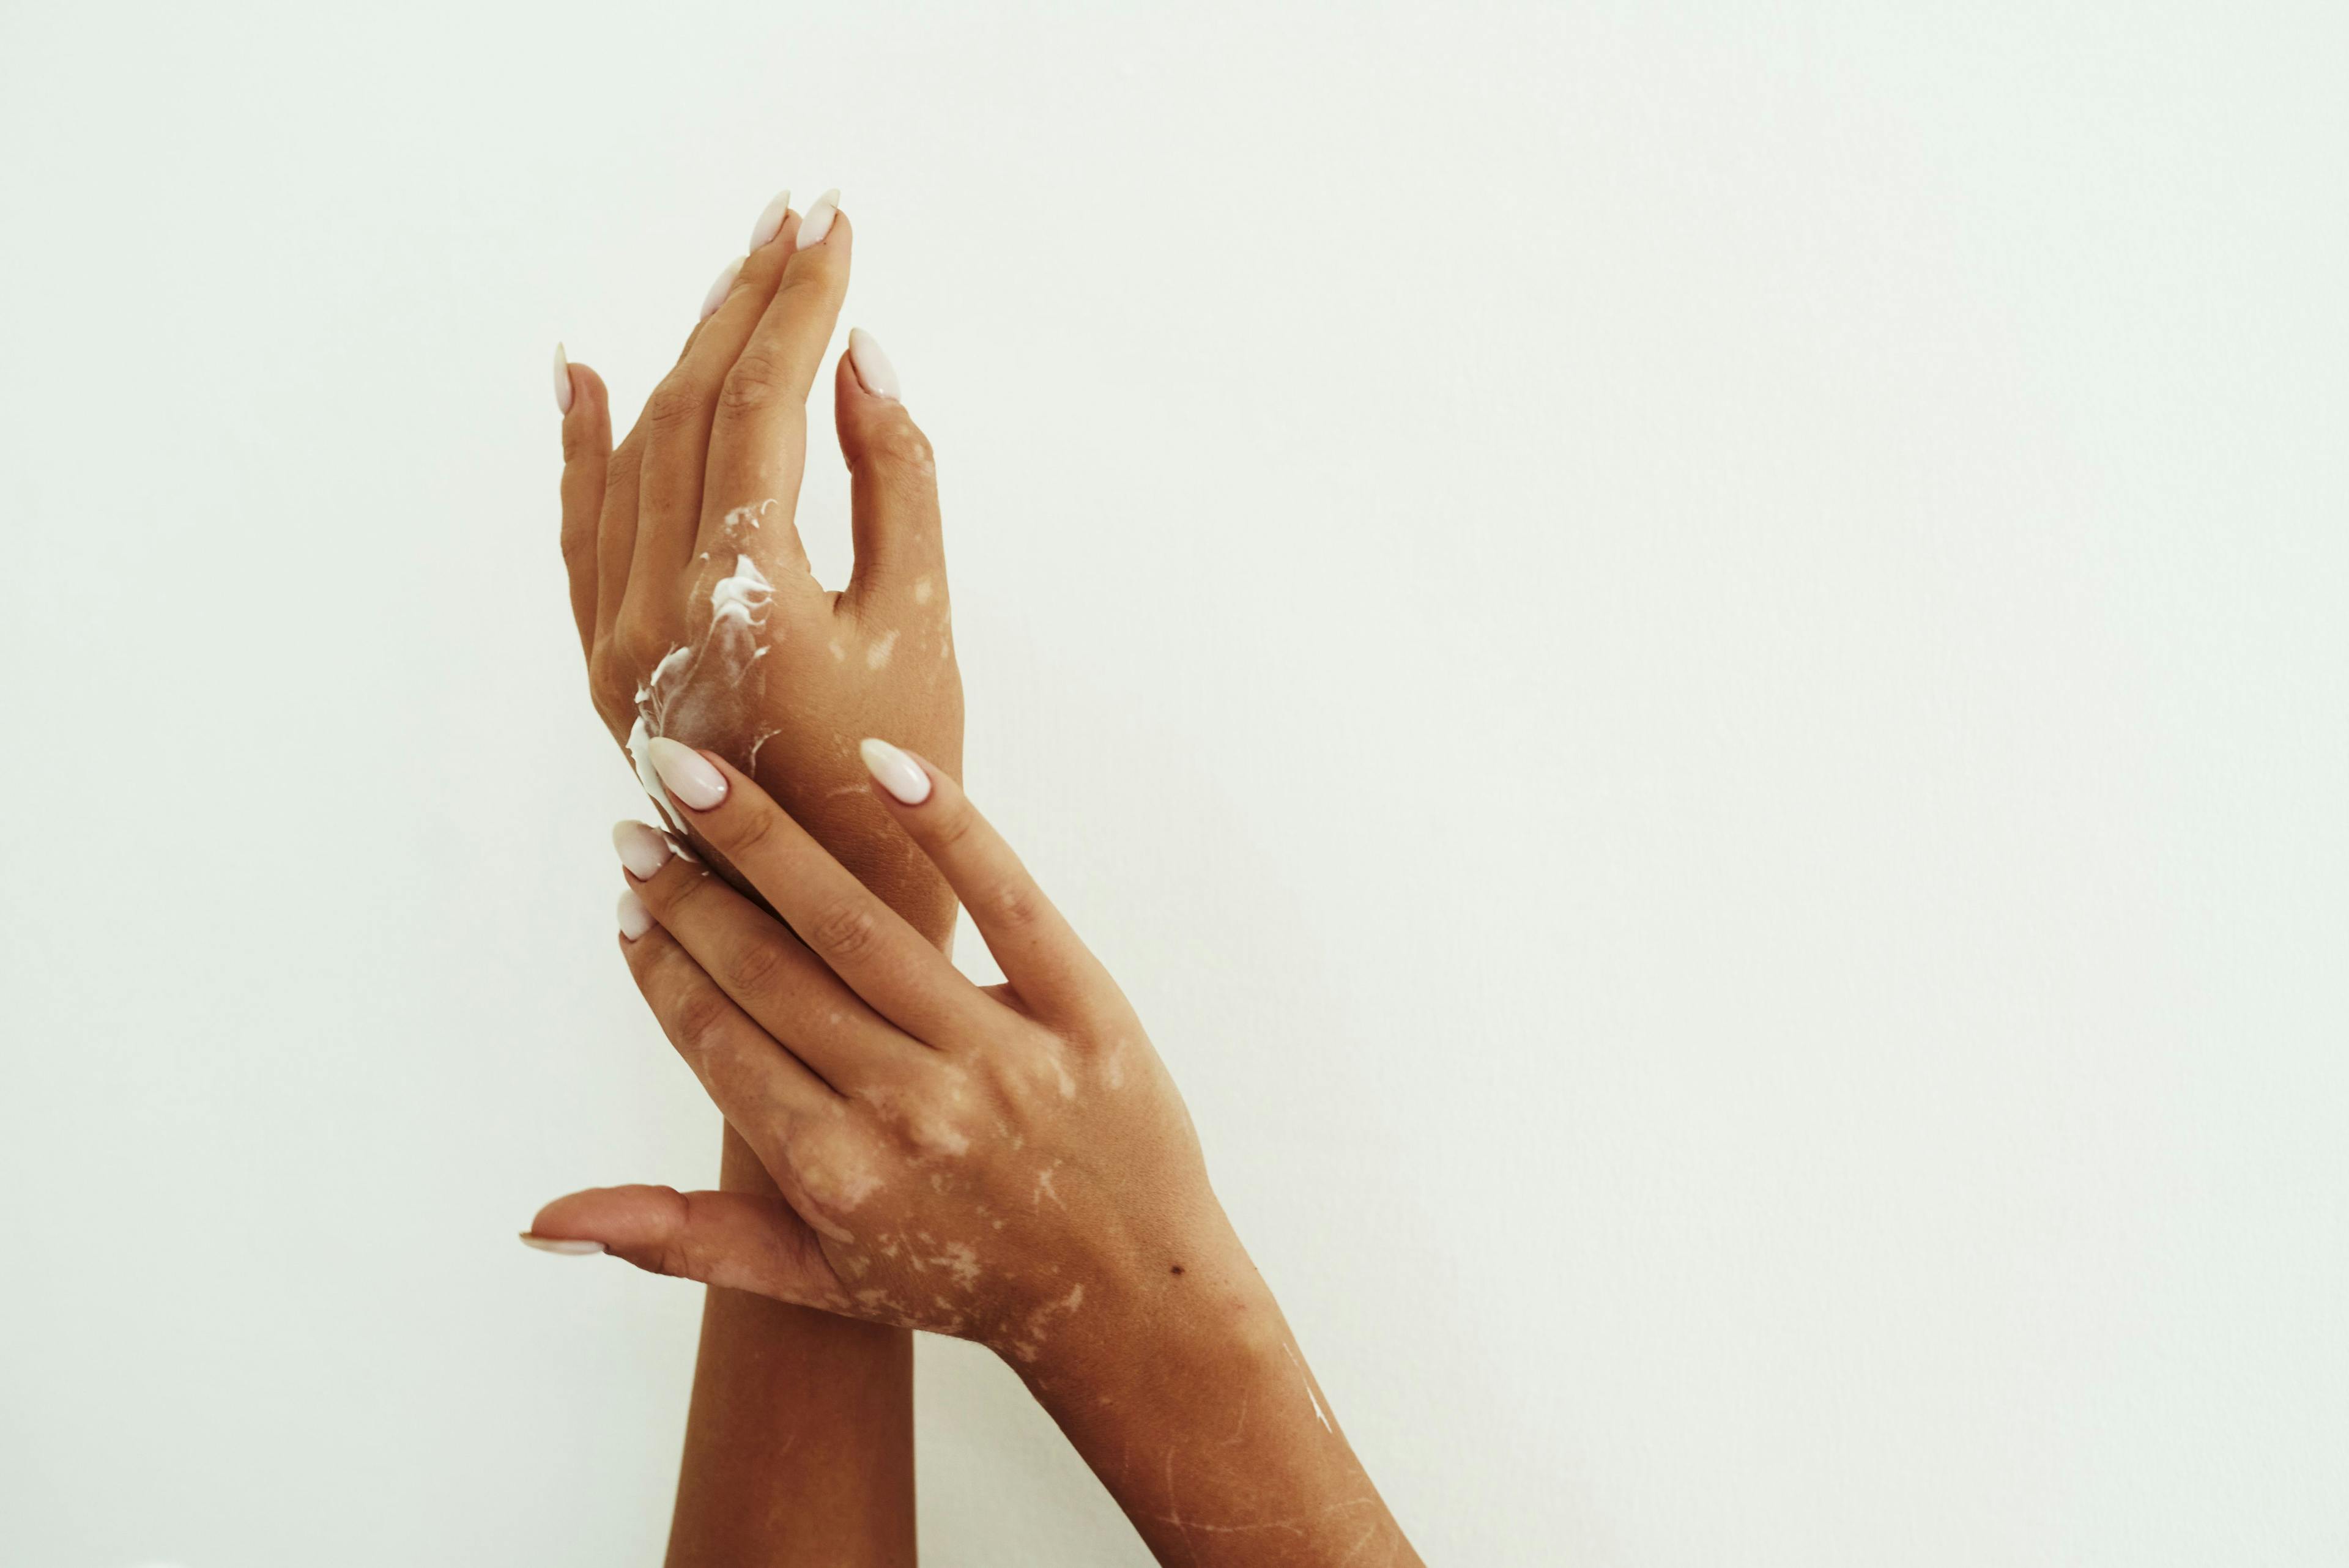 Woman with vitiligo on the hands applies a topical cream